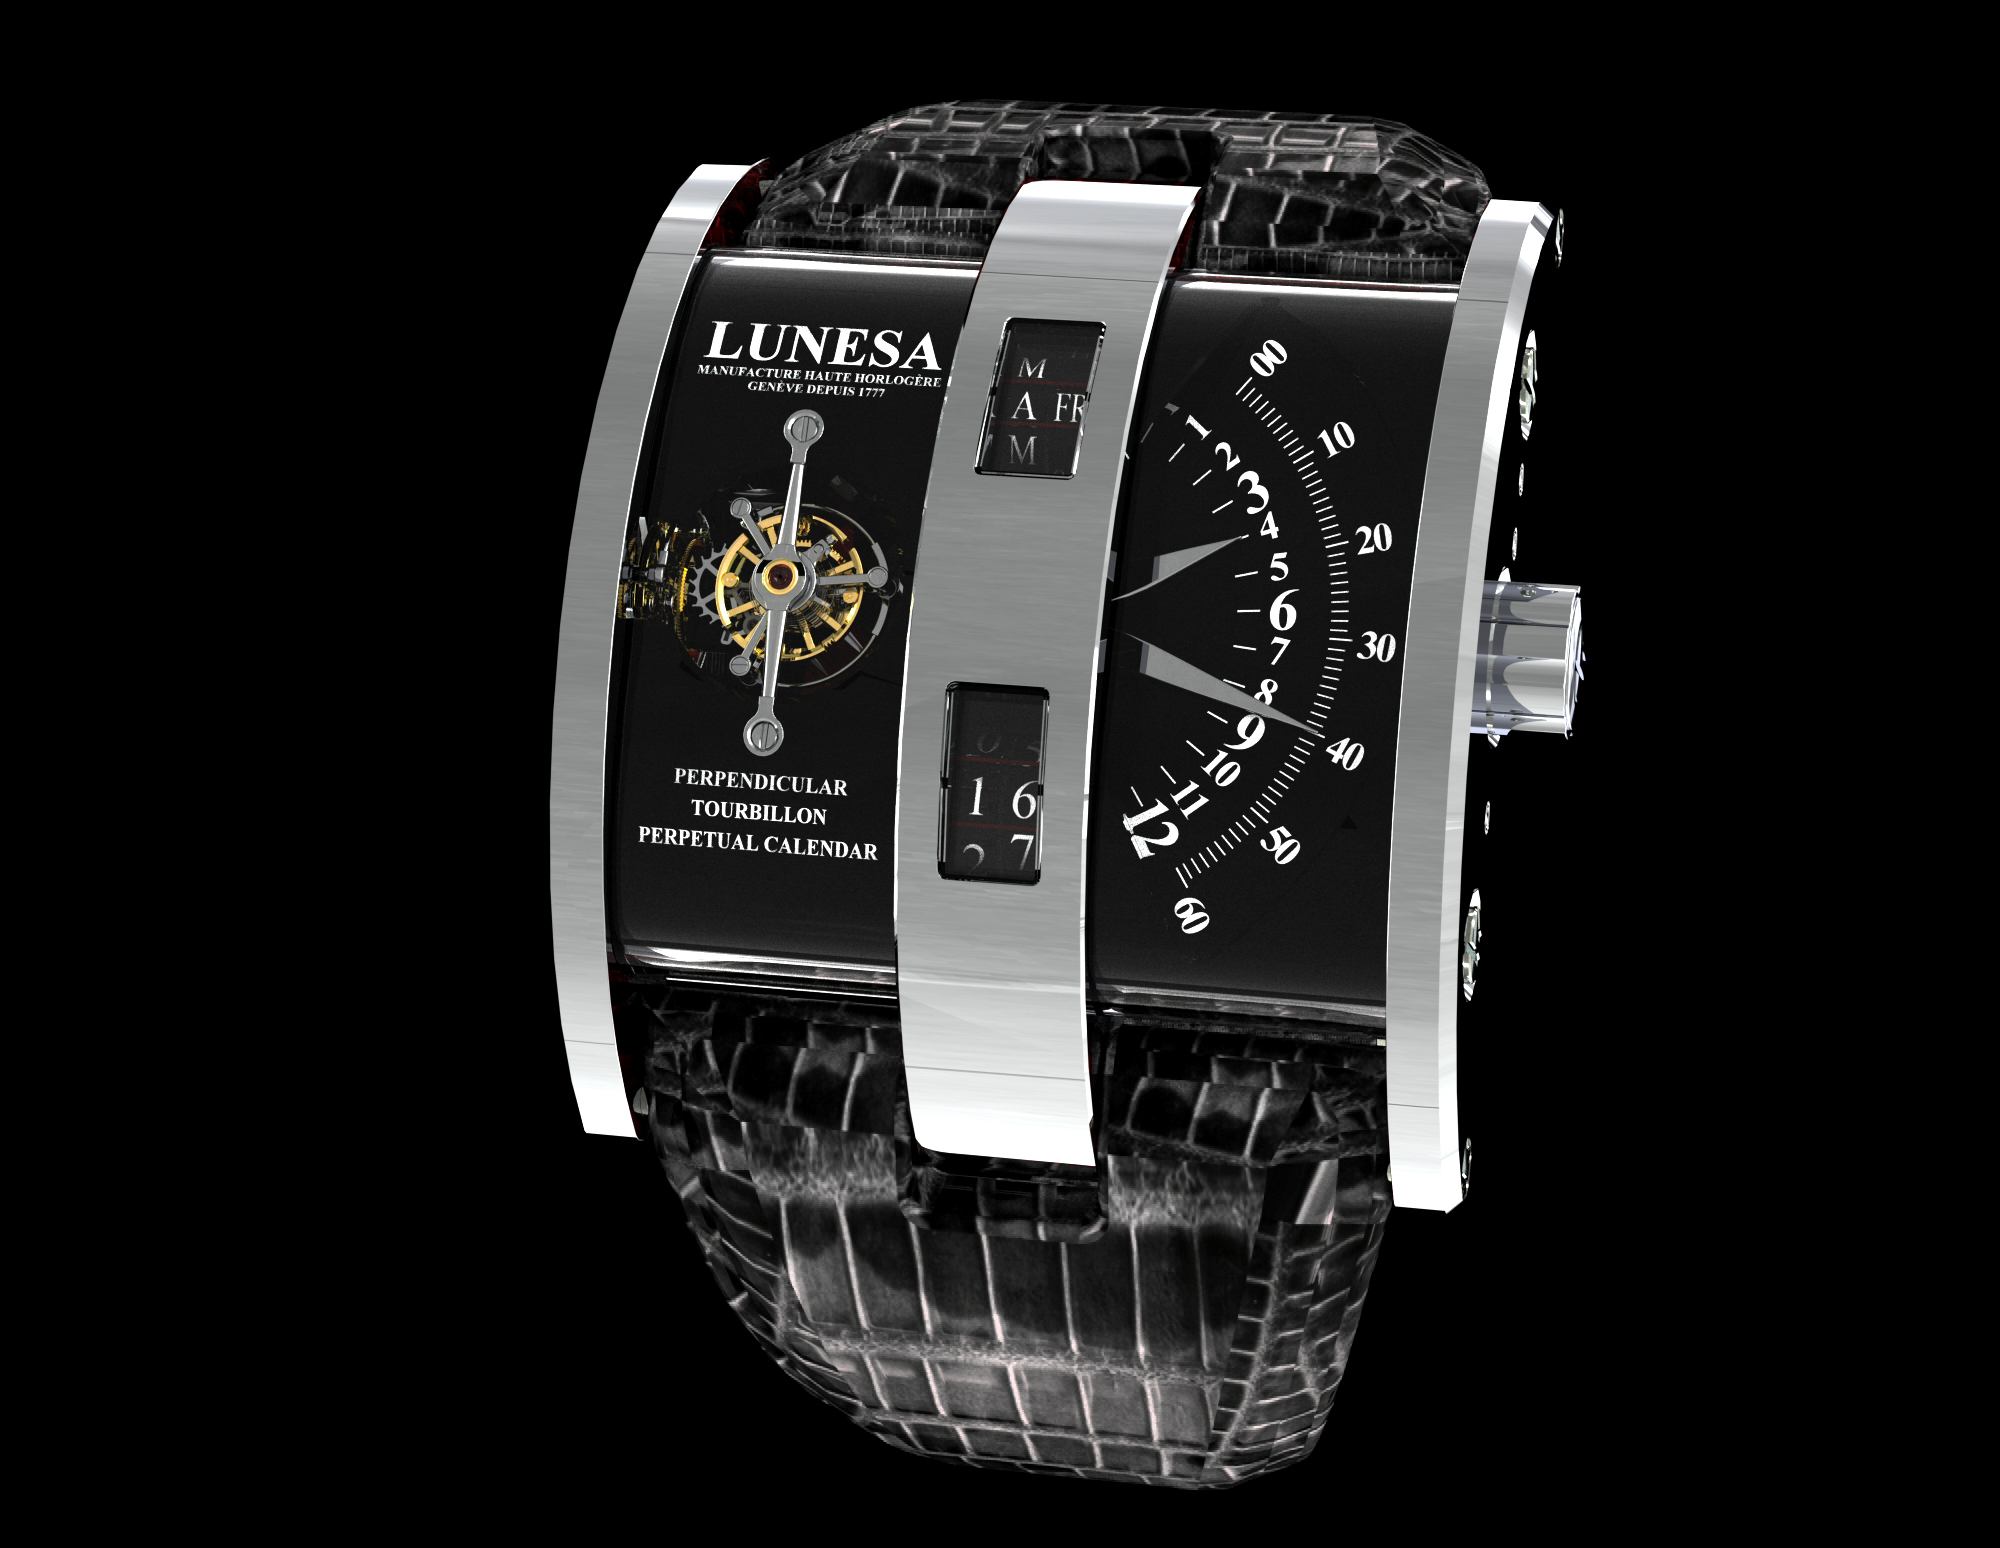 wristwatch Lunesa PERPENDICULAR TOURBILLON  PERPETUAL CALENDAR